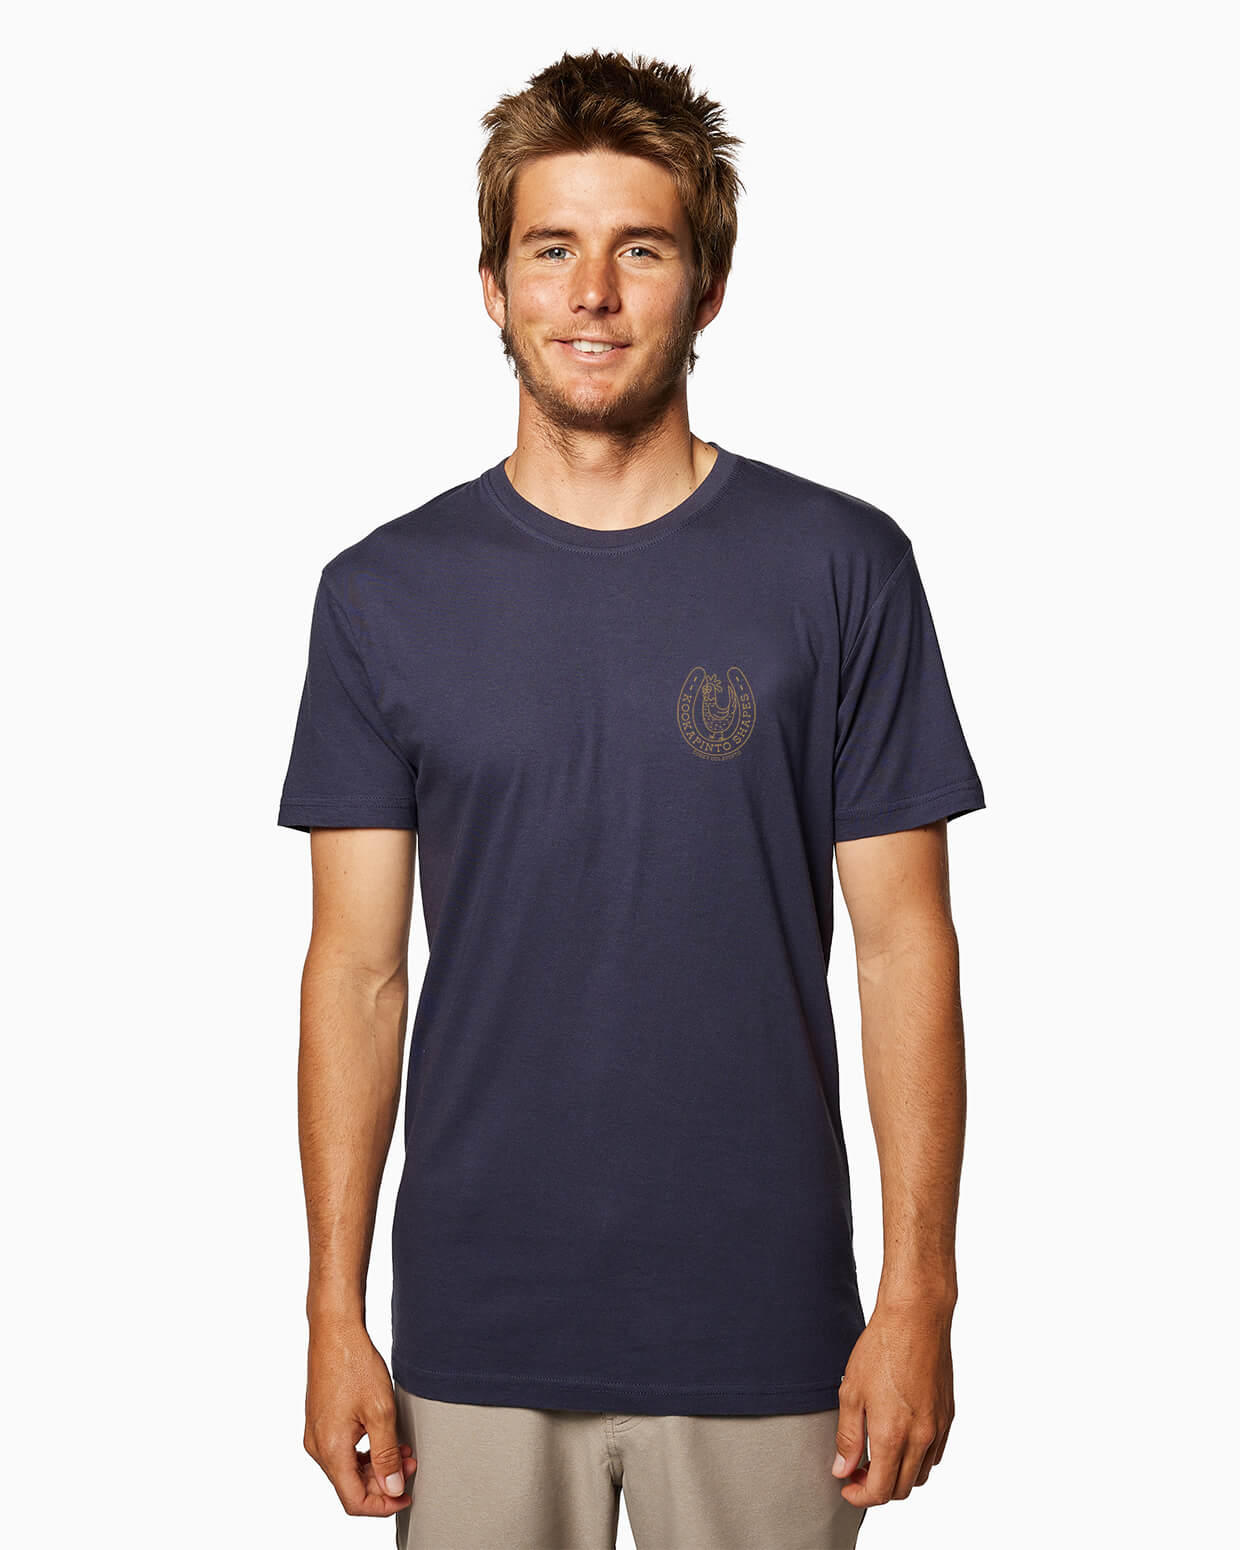 Kookapinto | Short Sleeve T-Shirt